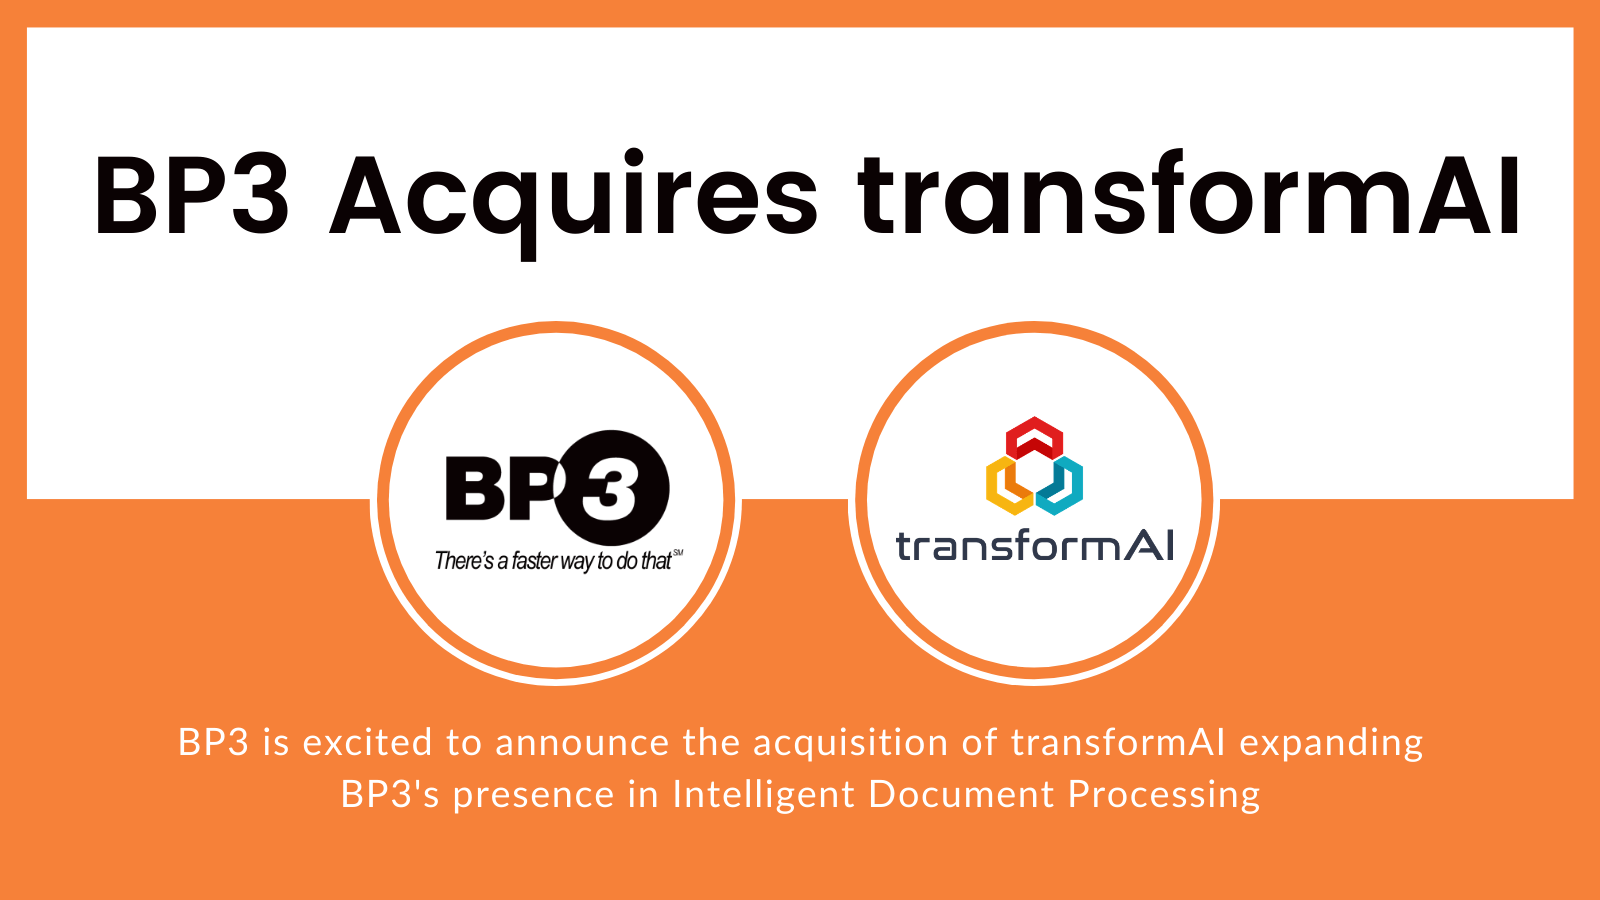 BP3 Global Acquires transformAI